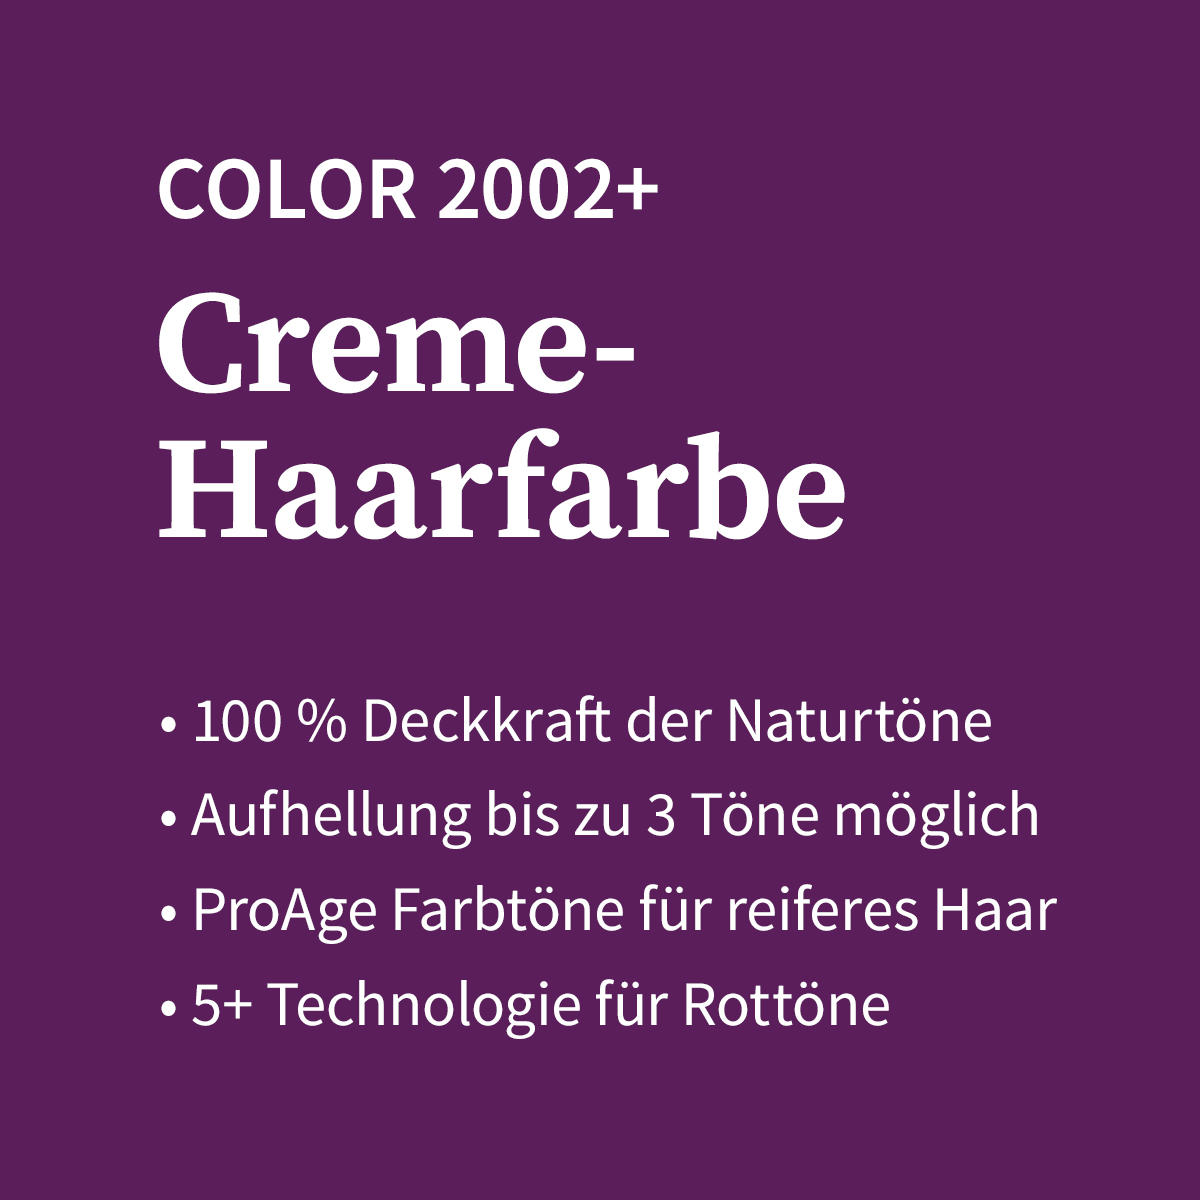 Basler Color 2002+ Cremehaarfarbe 5/44 hellbraun rot intensiv, Tube 60 ml - 4